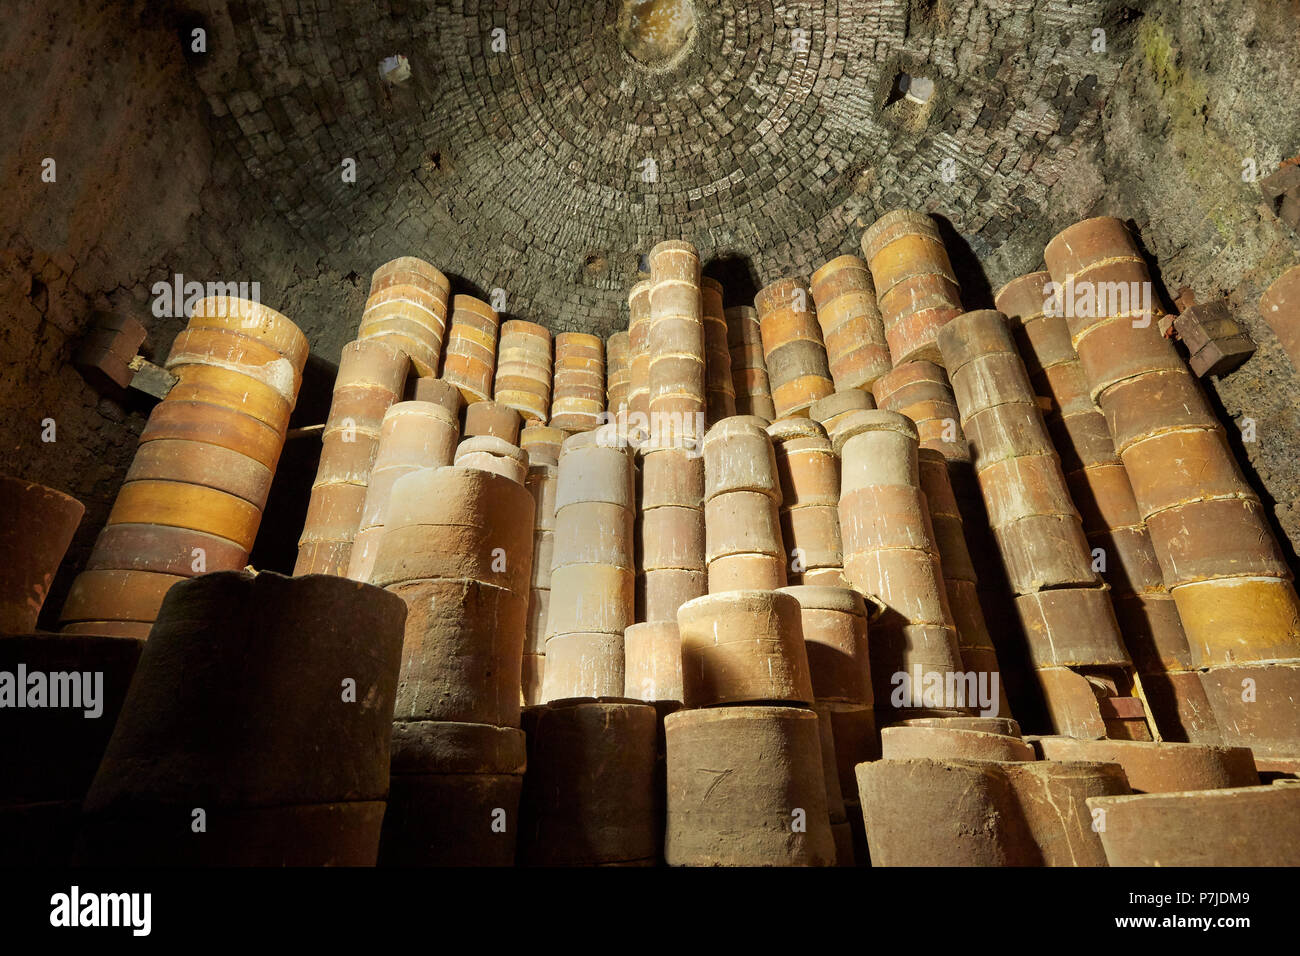 Saggars Inside a Bottle Kiln at Gladstone Pottery Museum Longton Stoke on Trent Staffordshire England UK Stock Photo